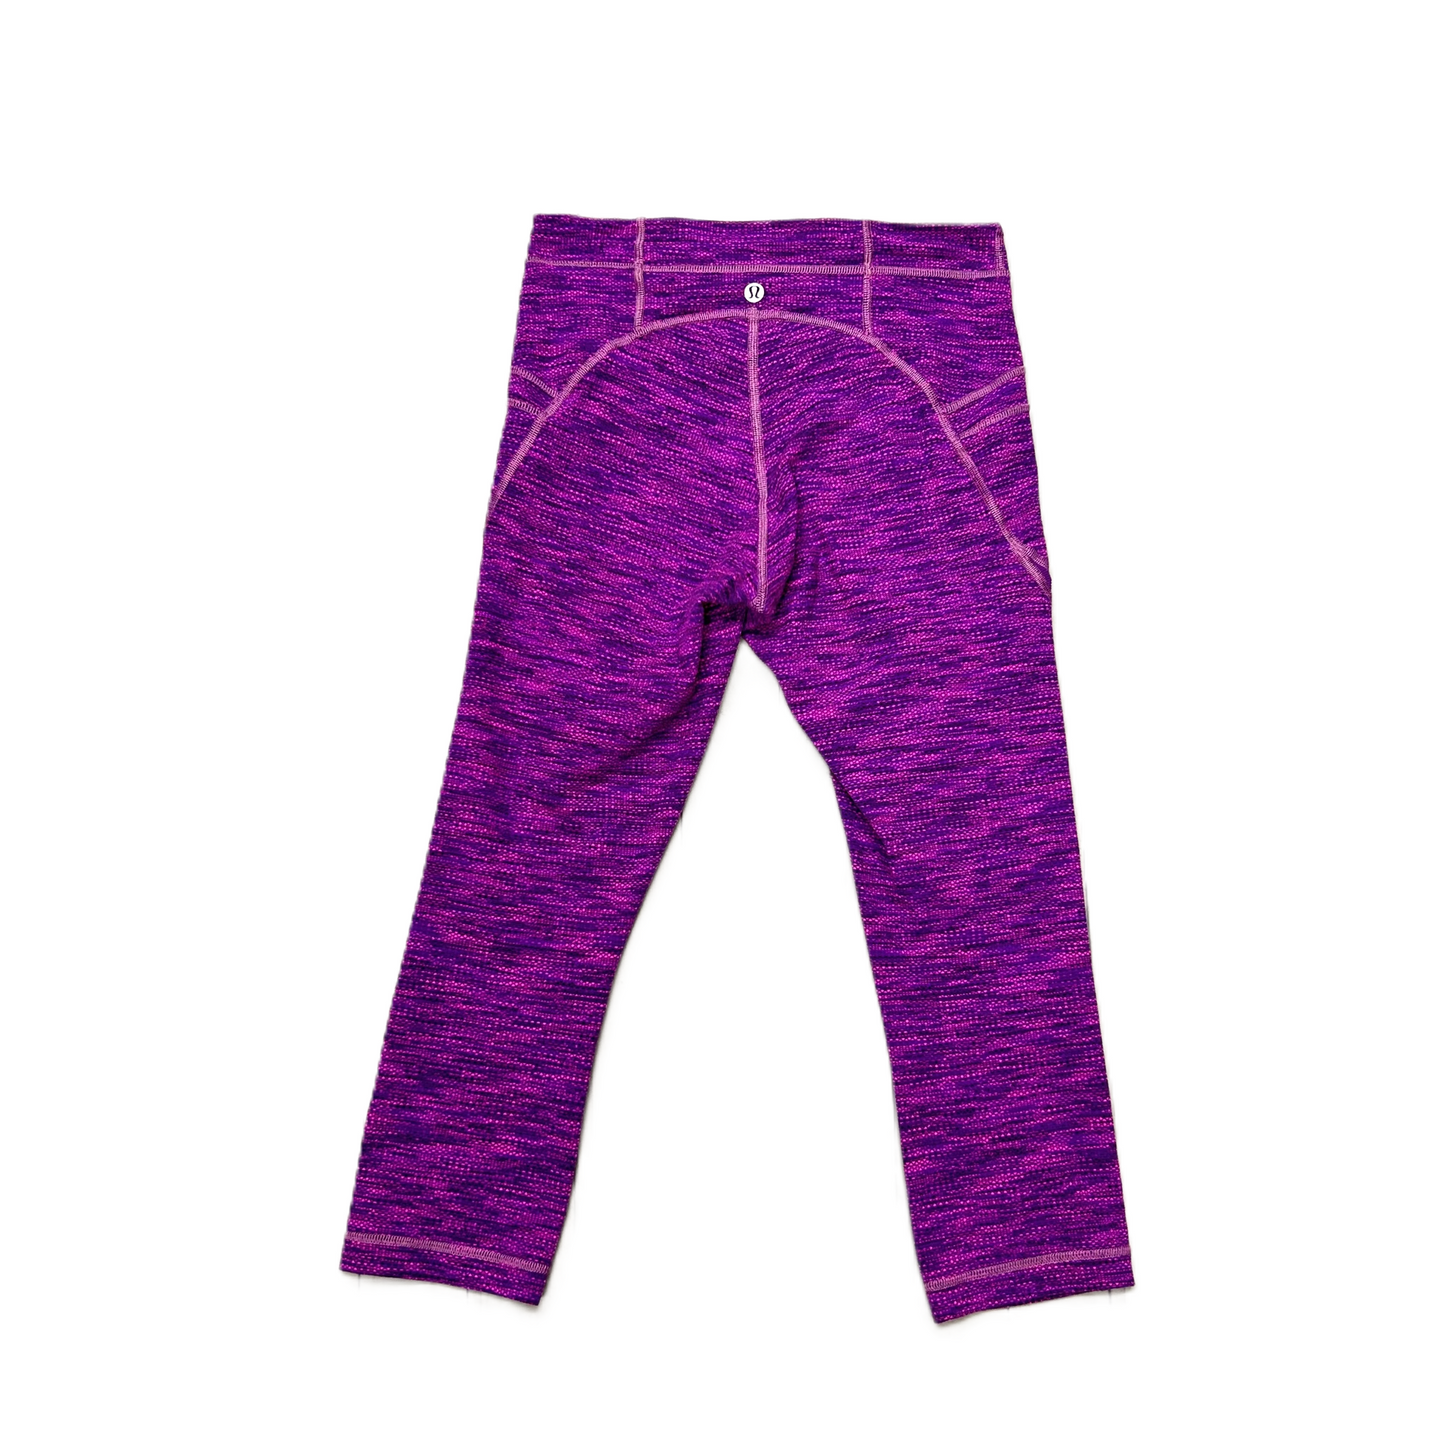 Pink & Purple Athletic Capris By Lululemon, Size: 6